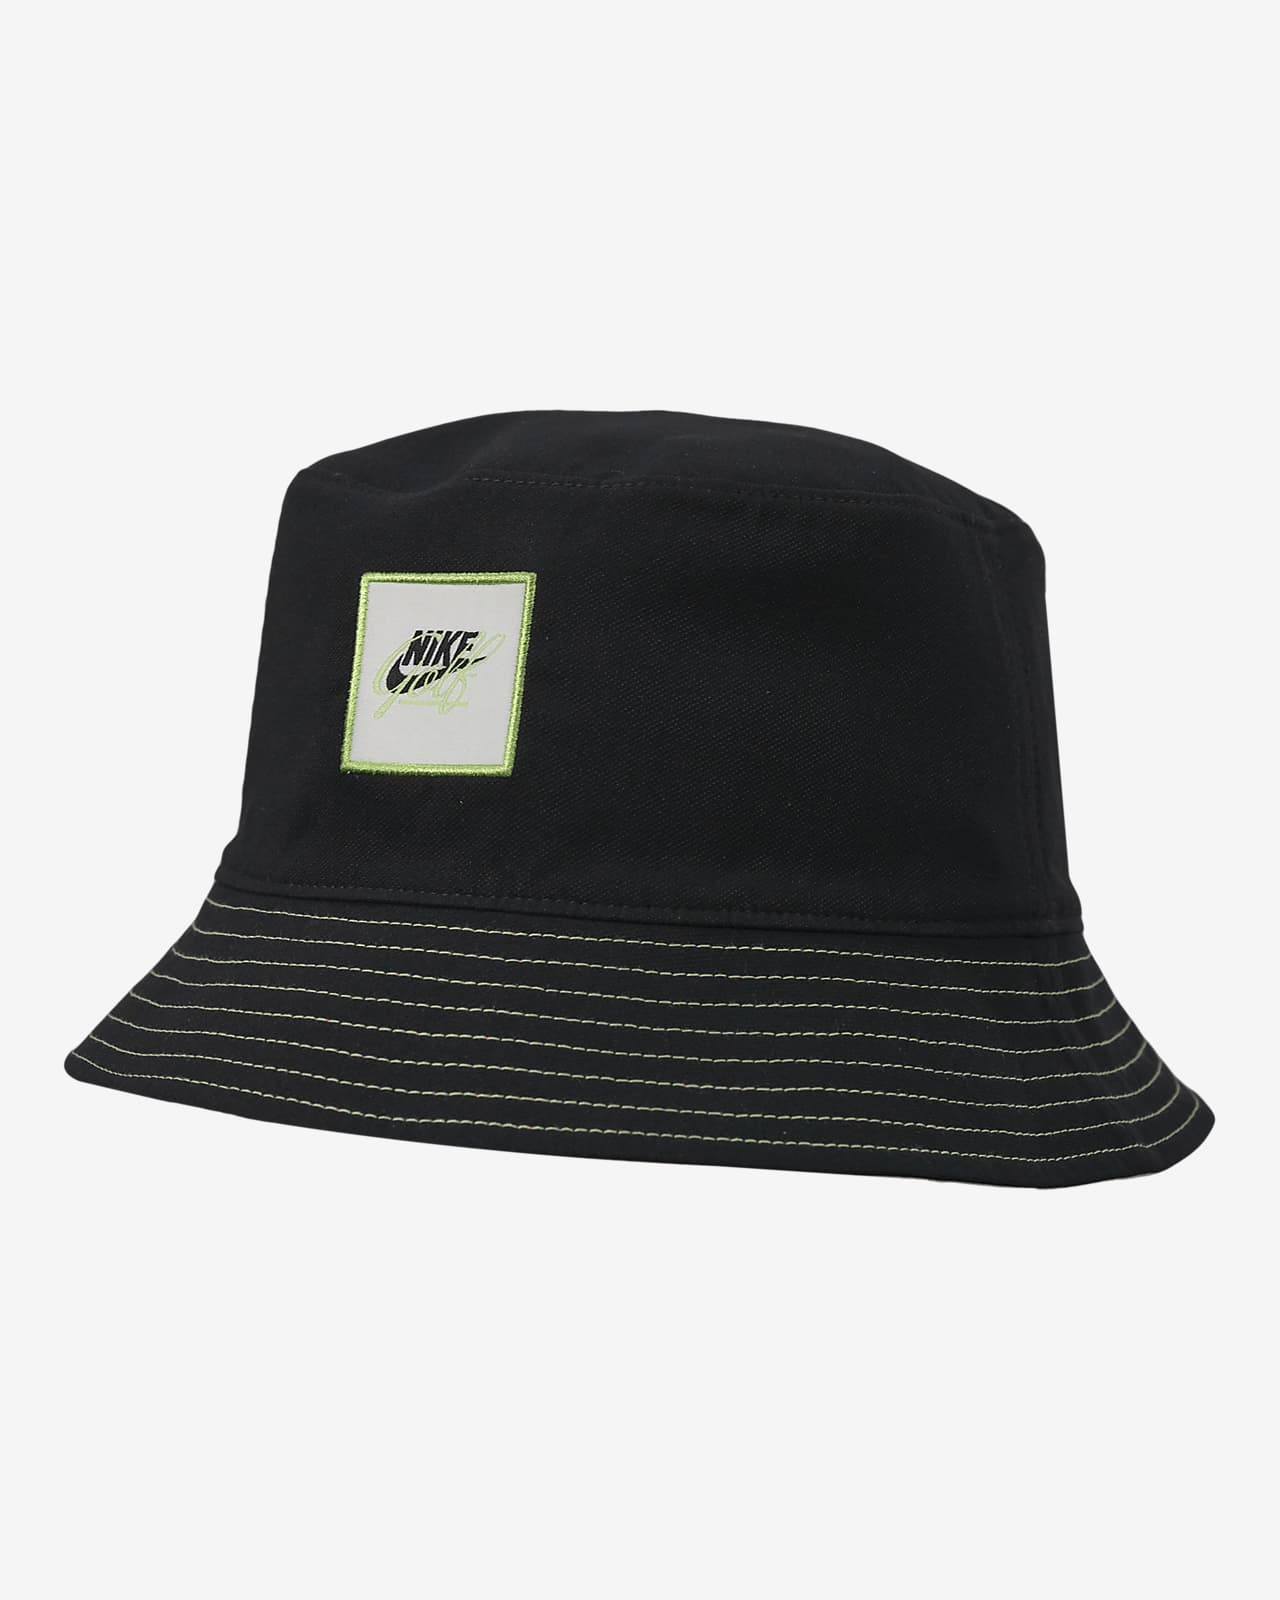 Nike Golf Hat. Reversible Bucket